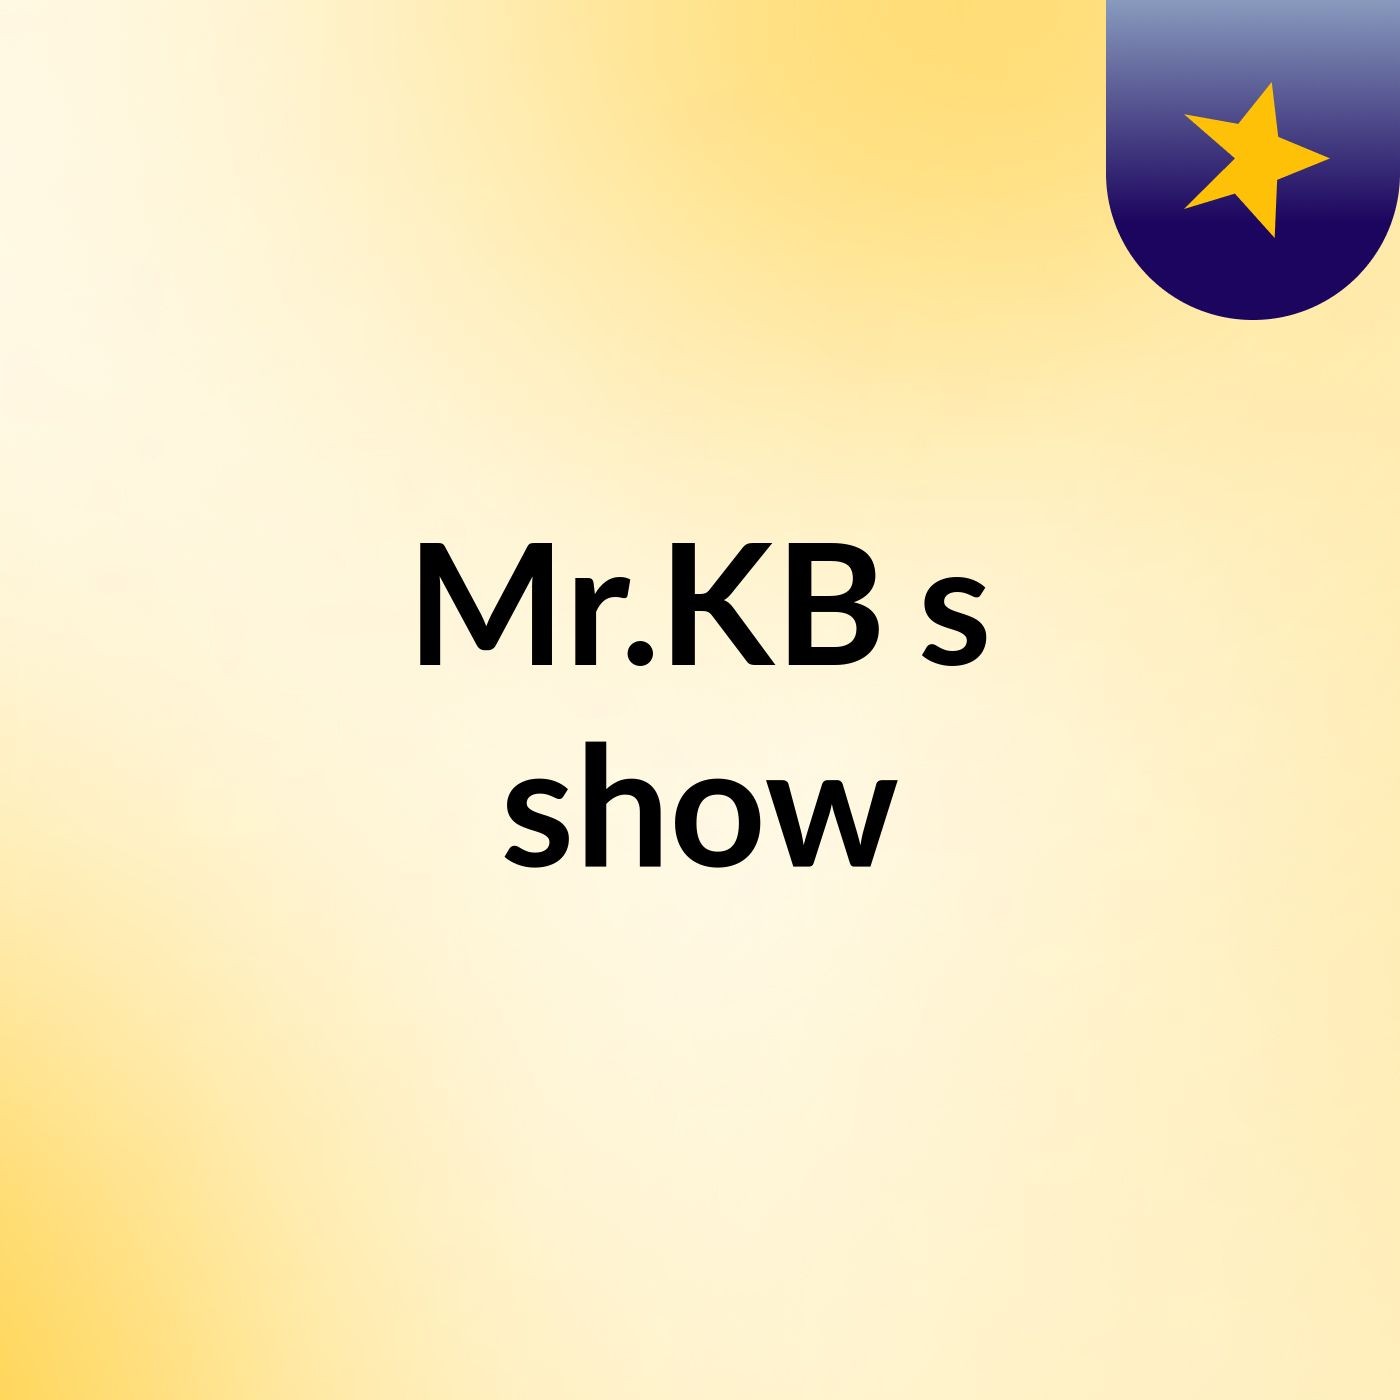 Mr.KB's show